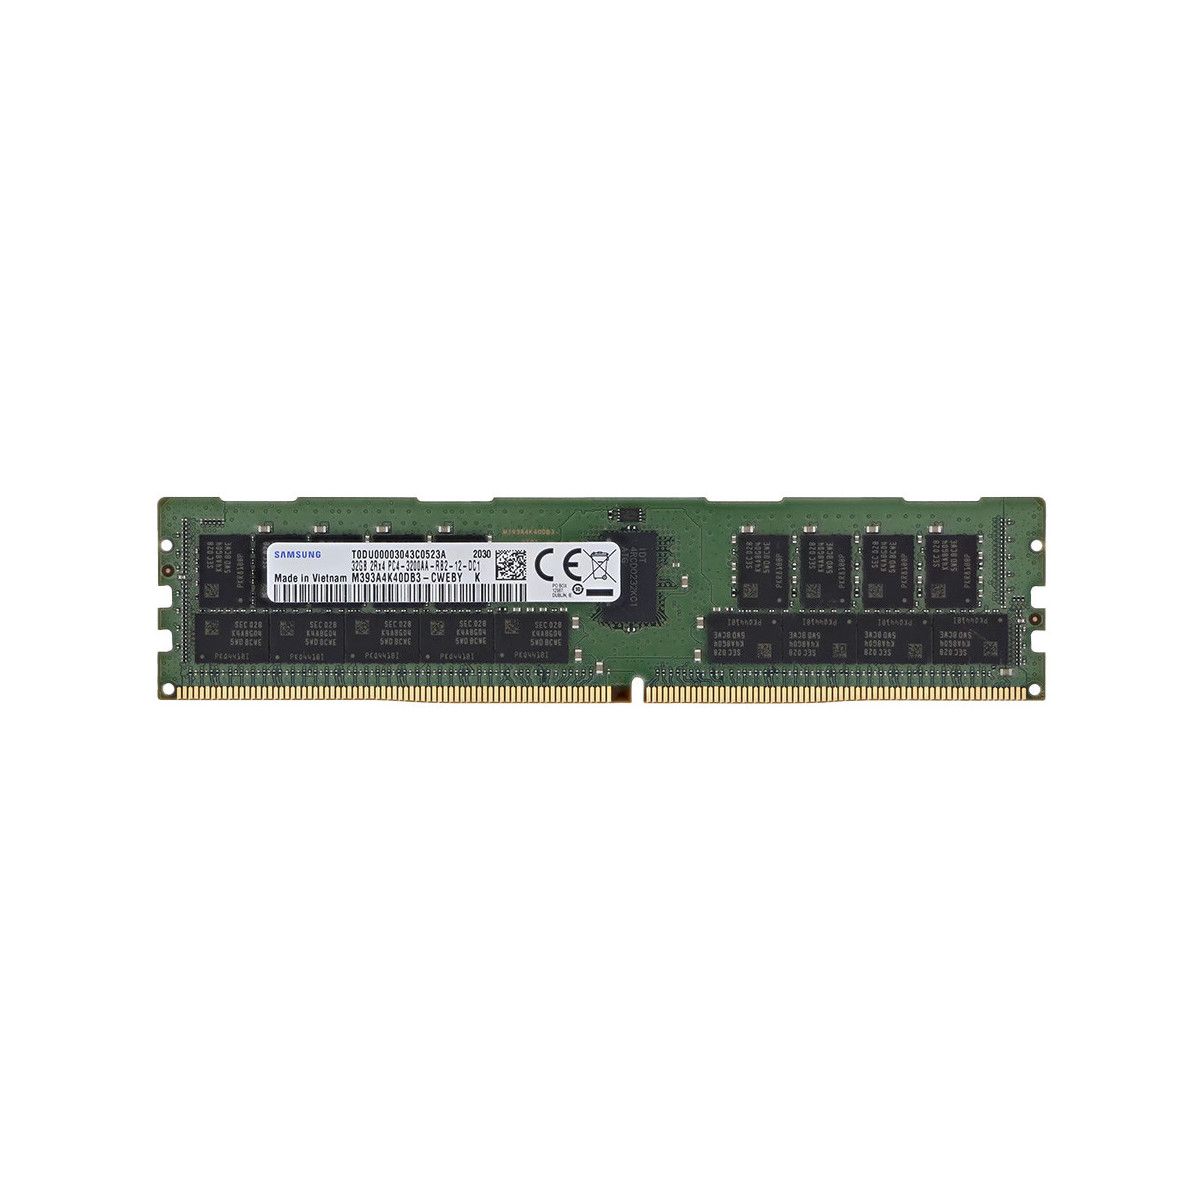 SNP75X1VC/32VXR-MS - Memstar 1x 32GB DDR4-3200 RDIMM PC4-25600R - OEM compatible con Mem-Star Memoria 1 - Memstar 